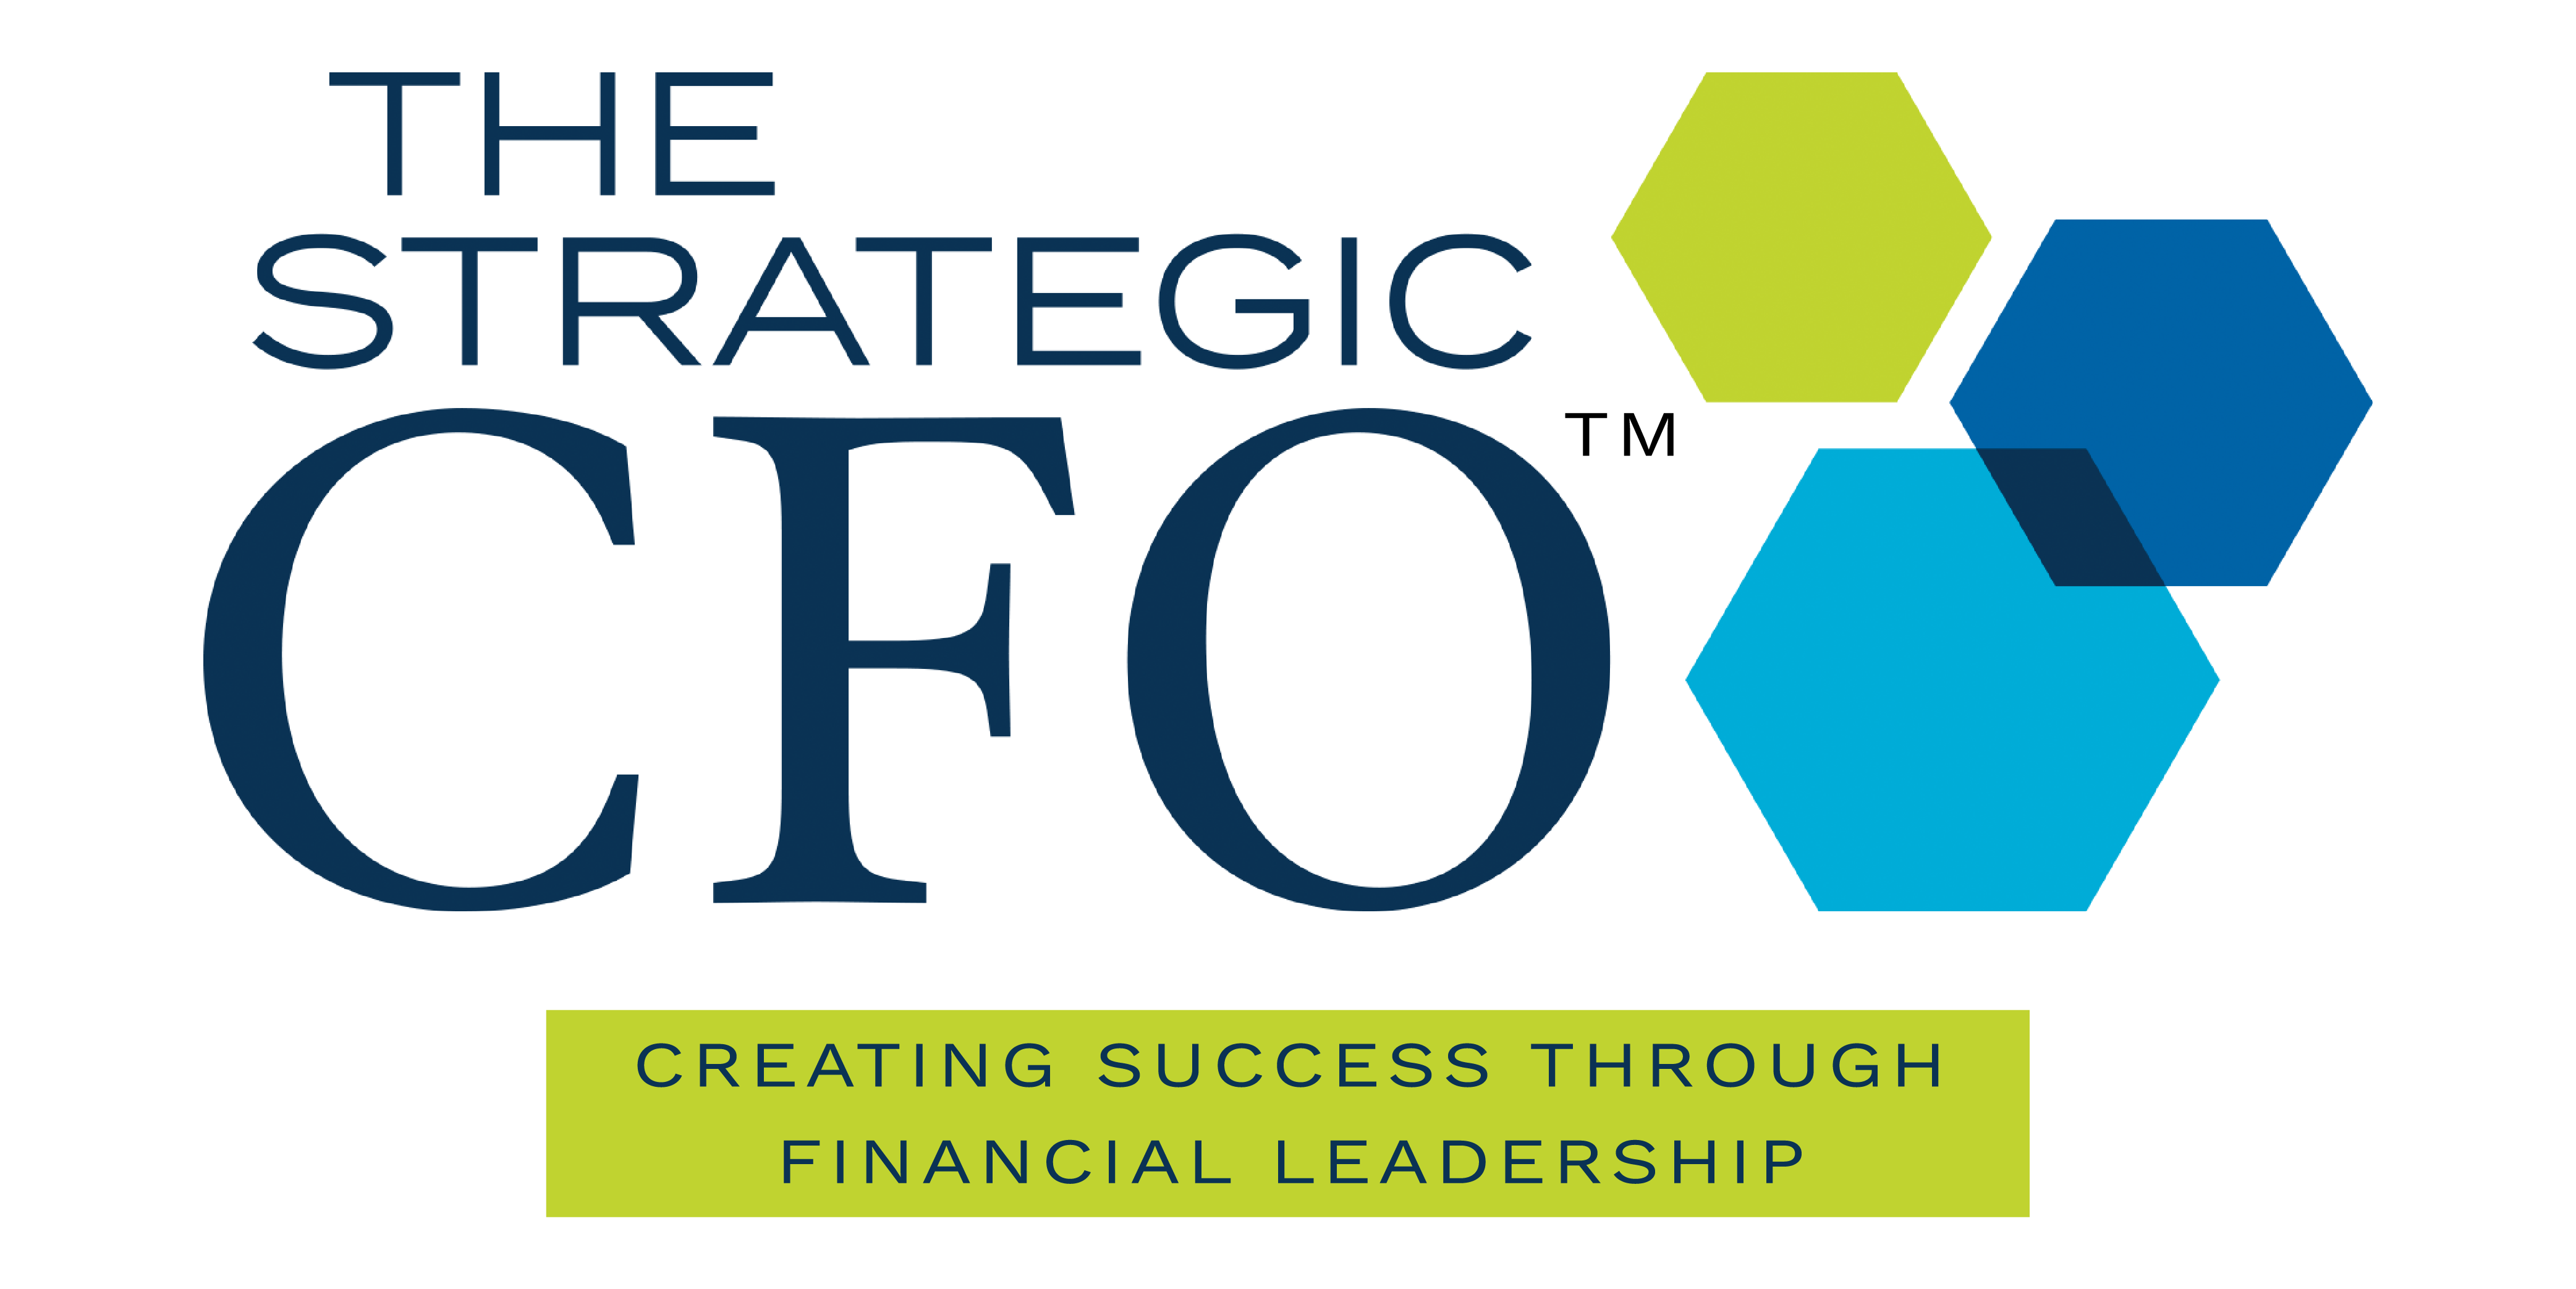 Strategic CFO banner promoting financial leadership success